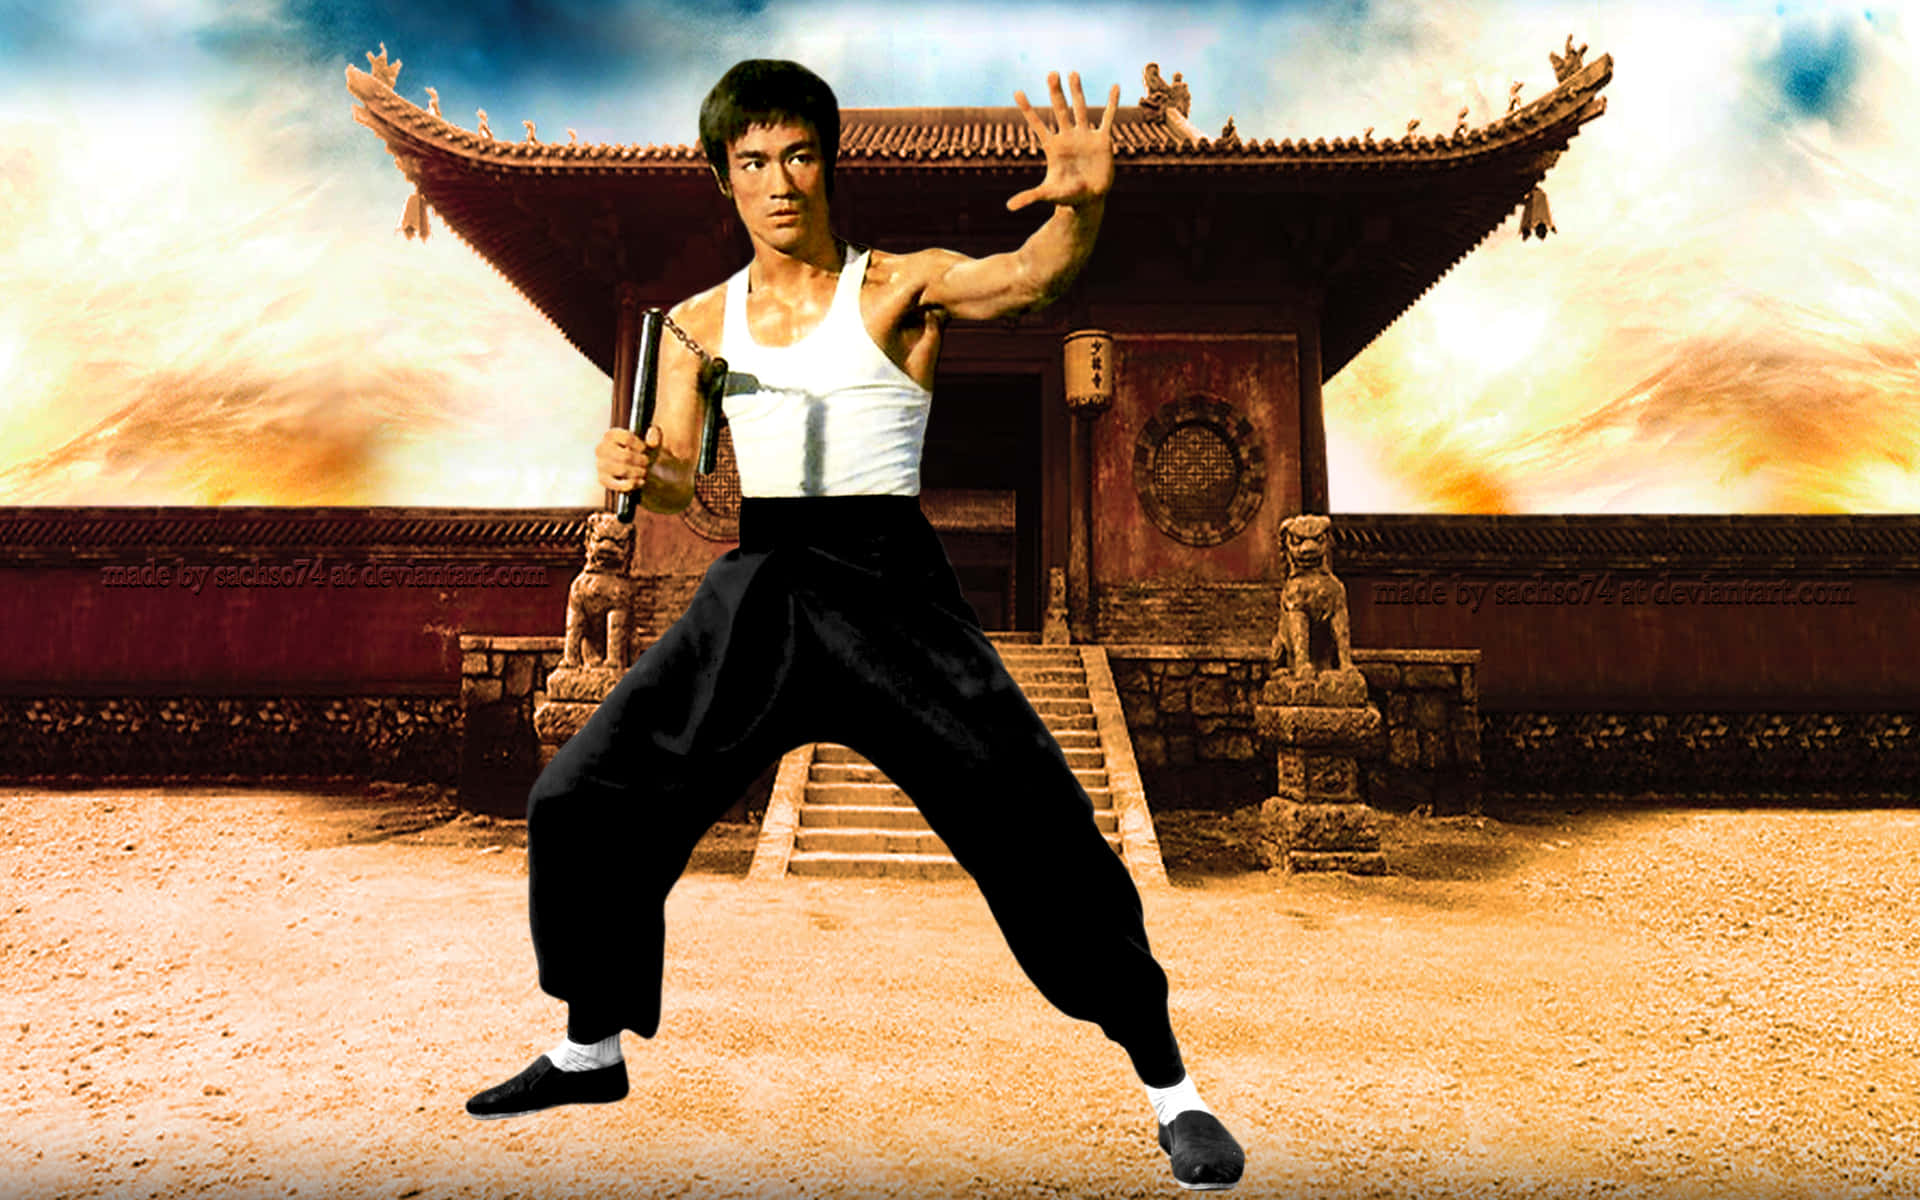 "Bruce Lee - Legend of Martial Arts"